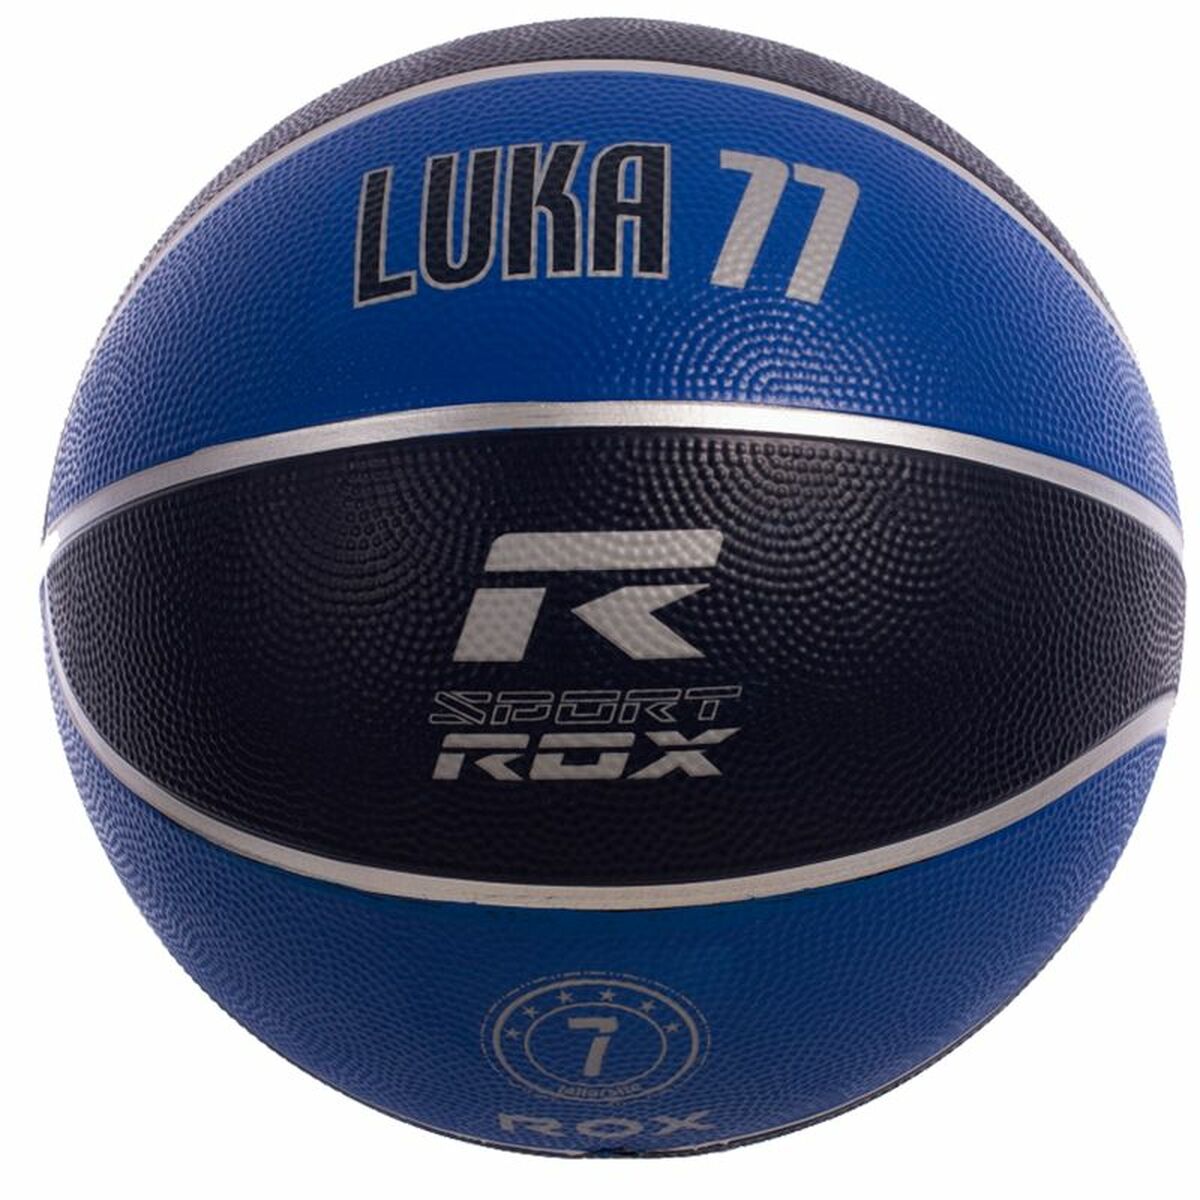 Basketball Ball Rox Luka 77 Blue 5